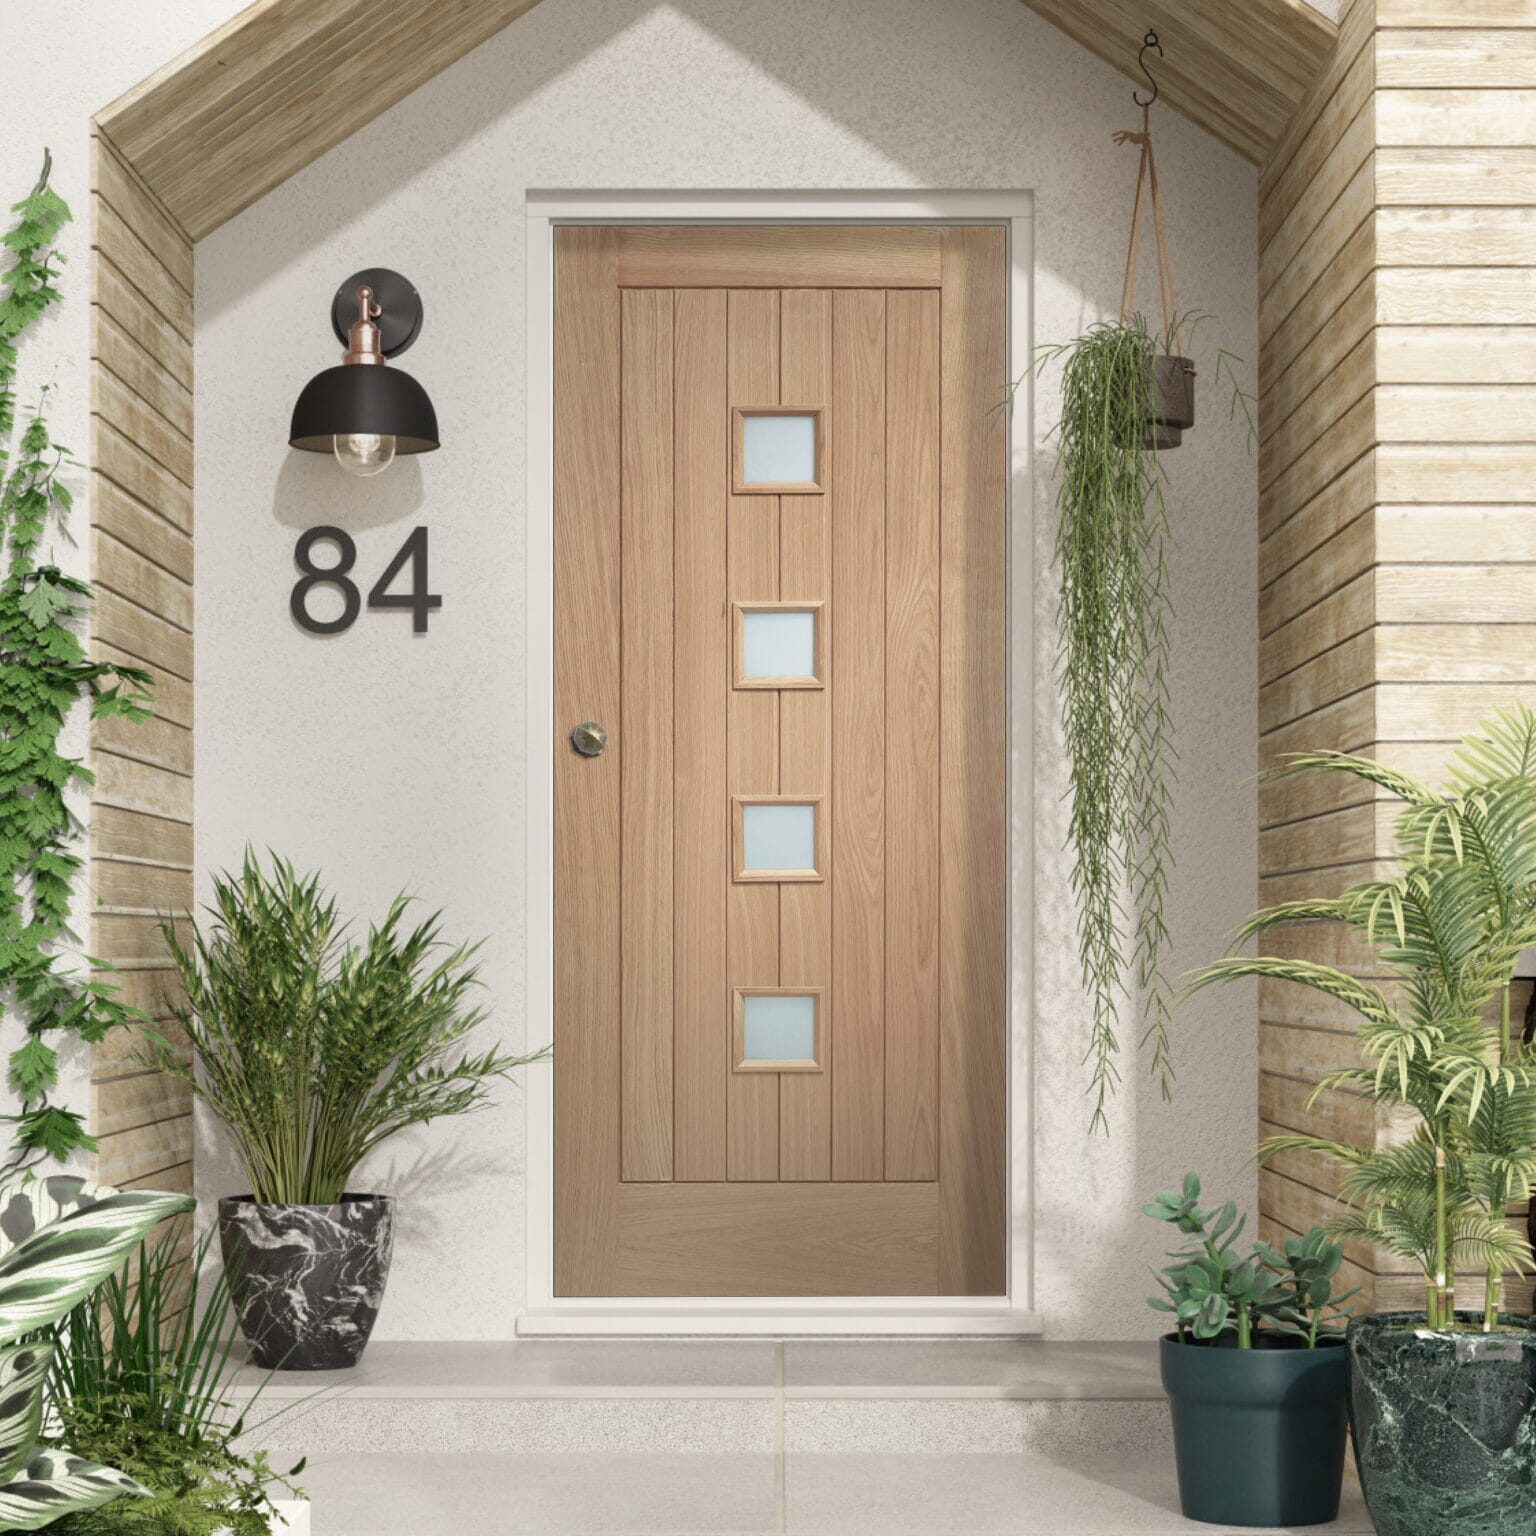 External Oak Doors: Choose An Oak Front Door You Love